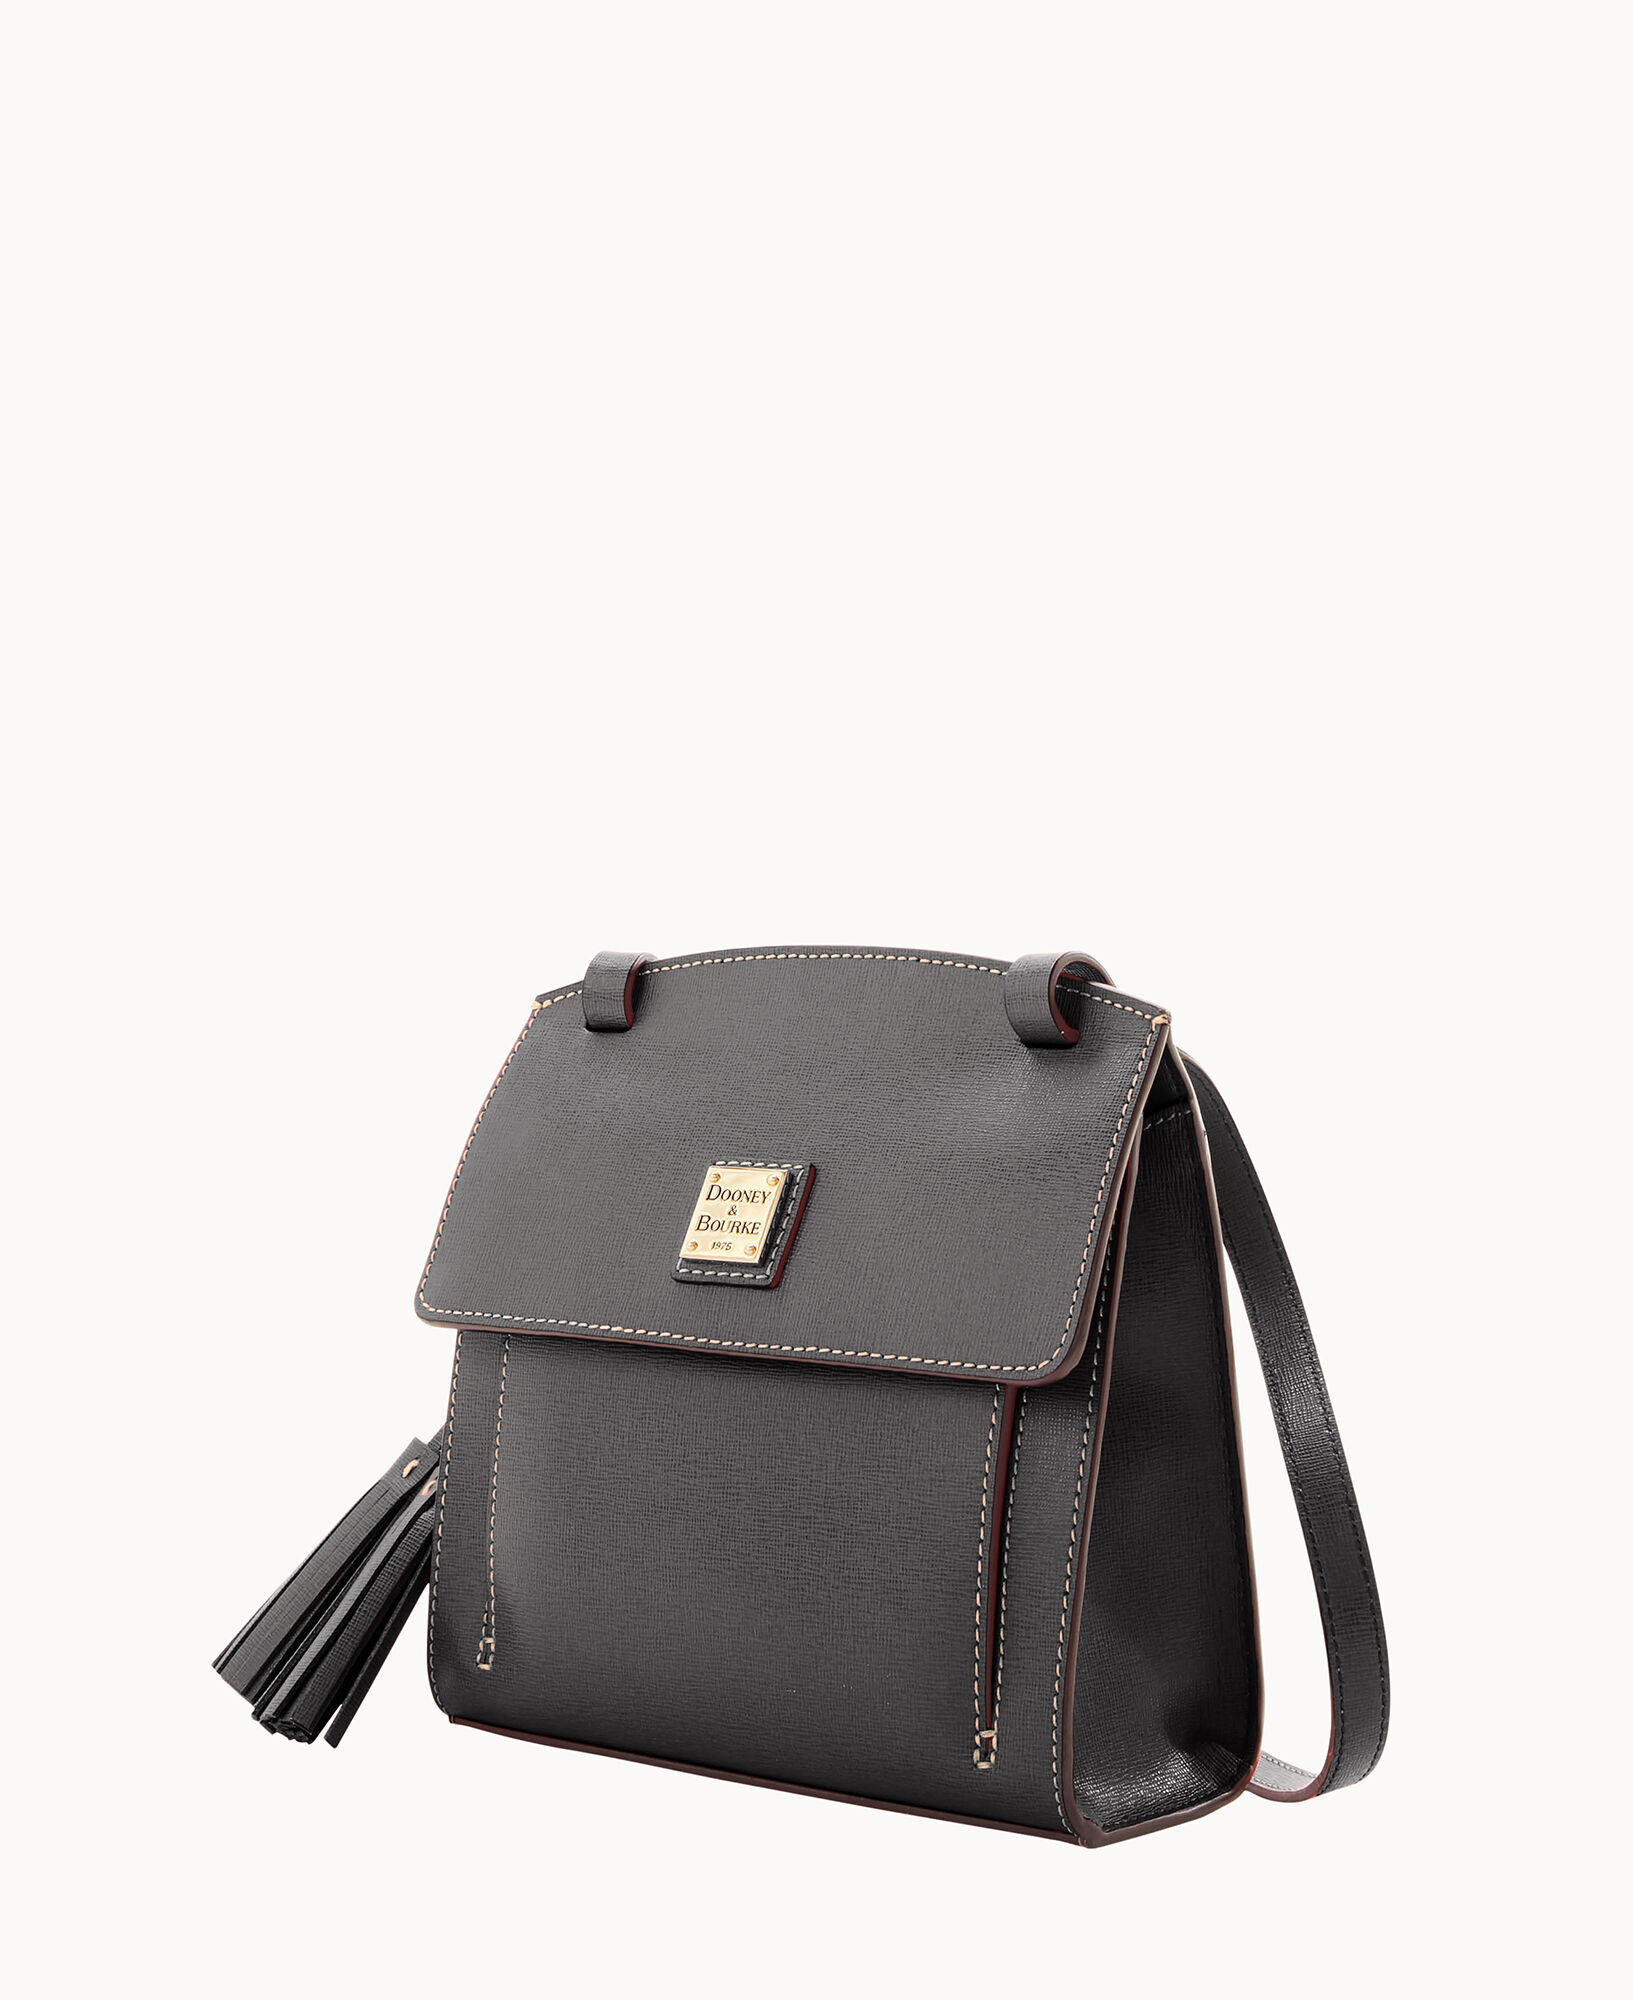 Buy FashionPuzzle Saffiano Small Dome Crossbody bag with Chain Strap, Black,  One Size at